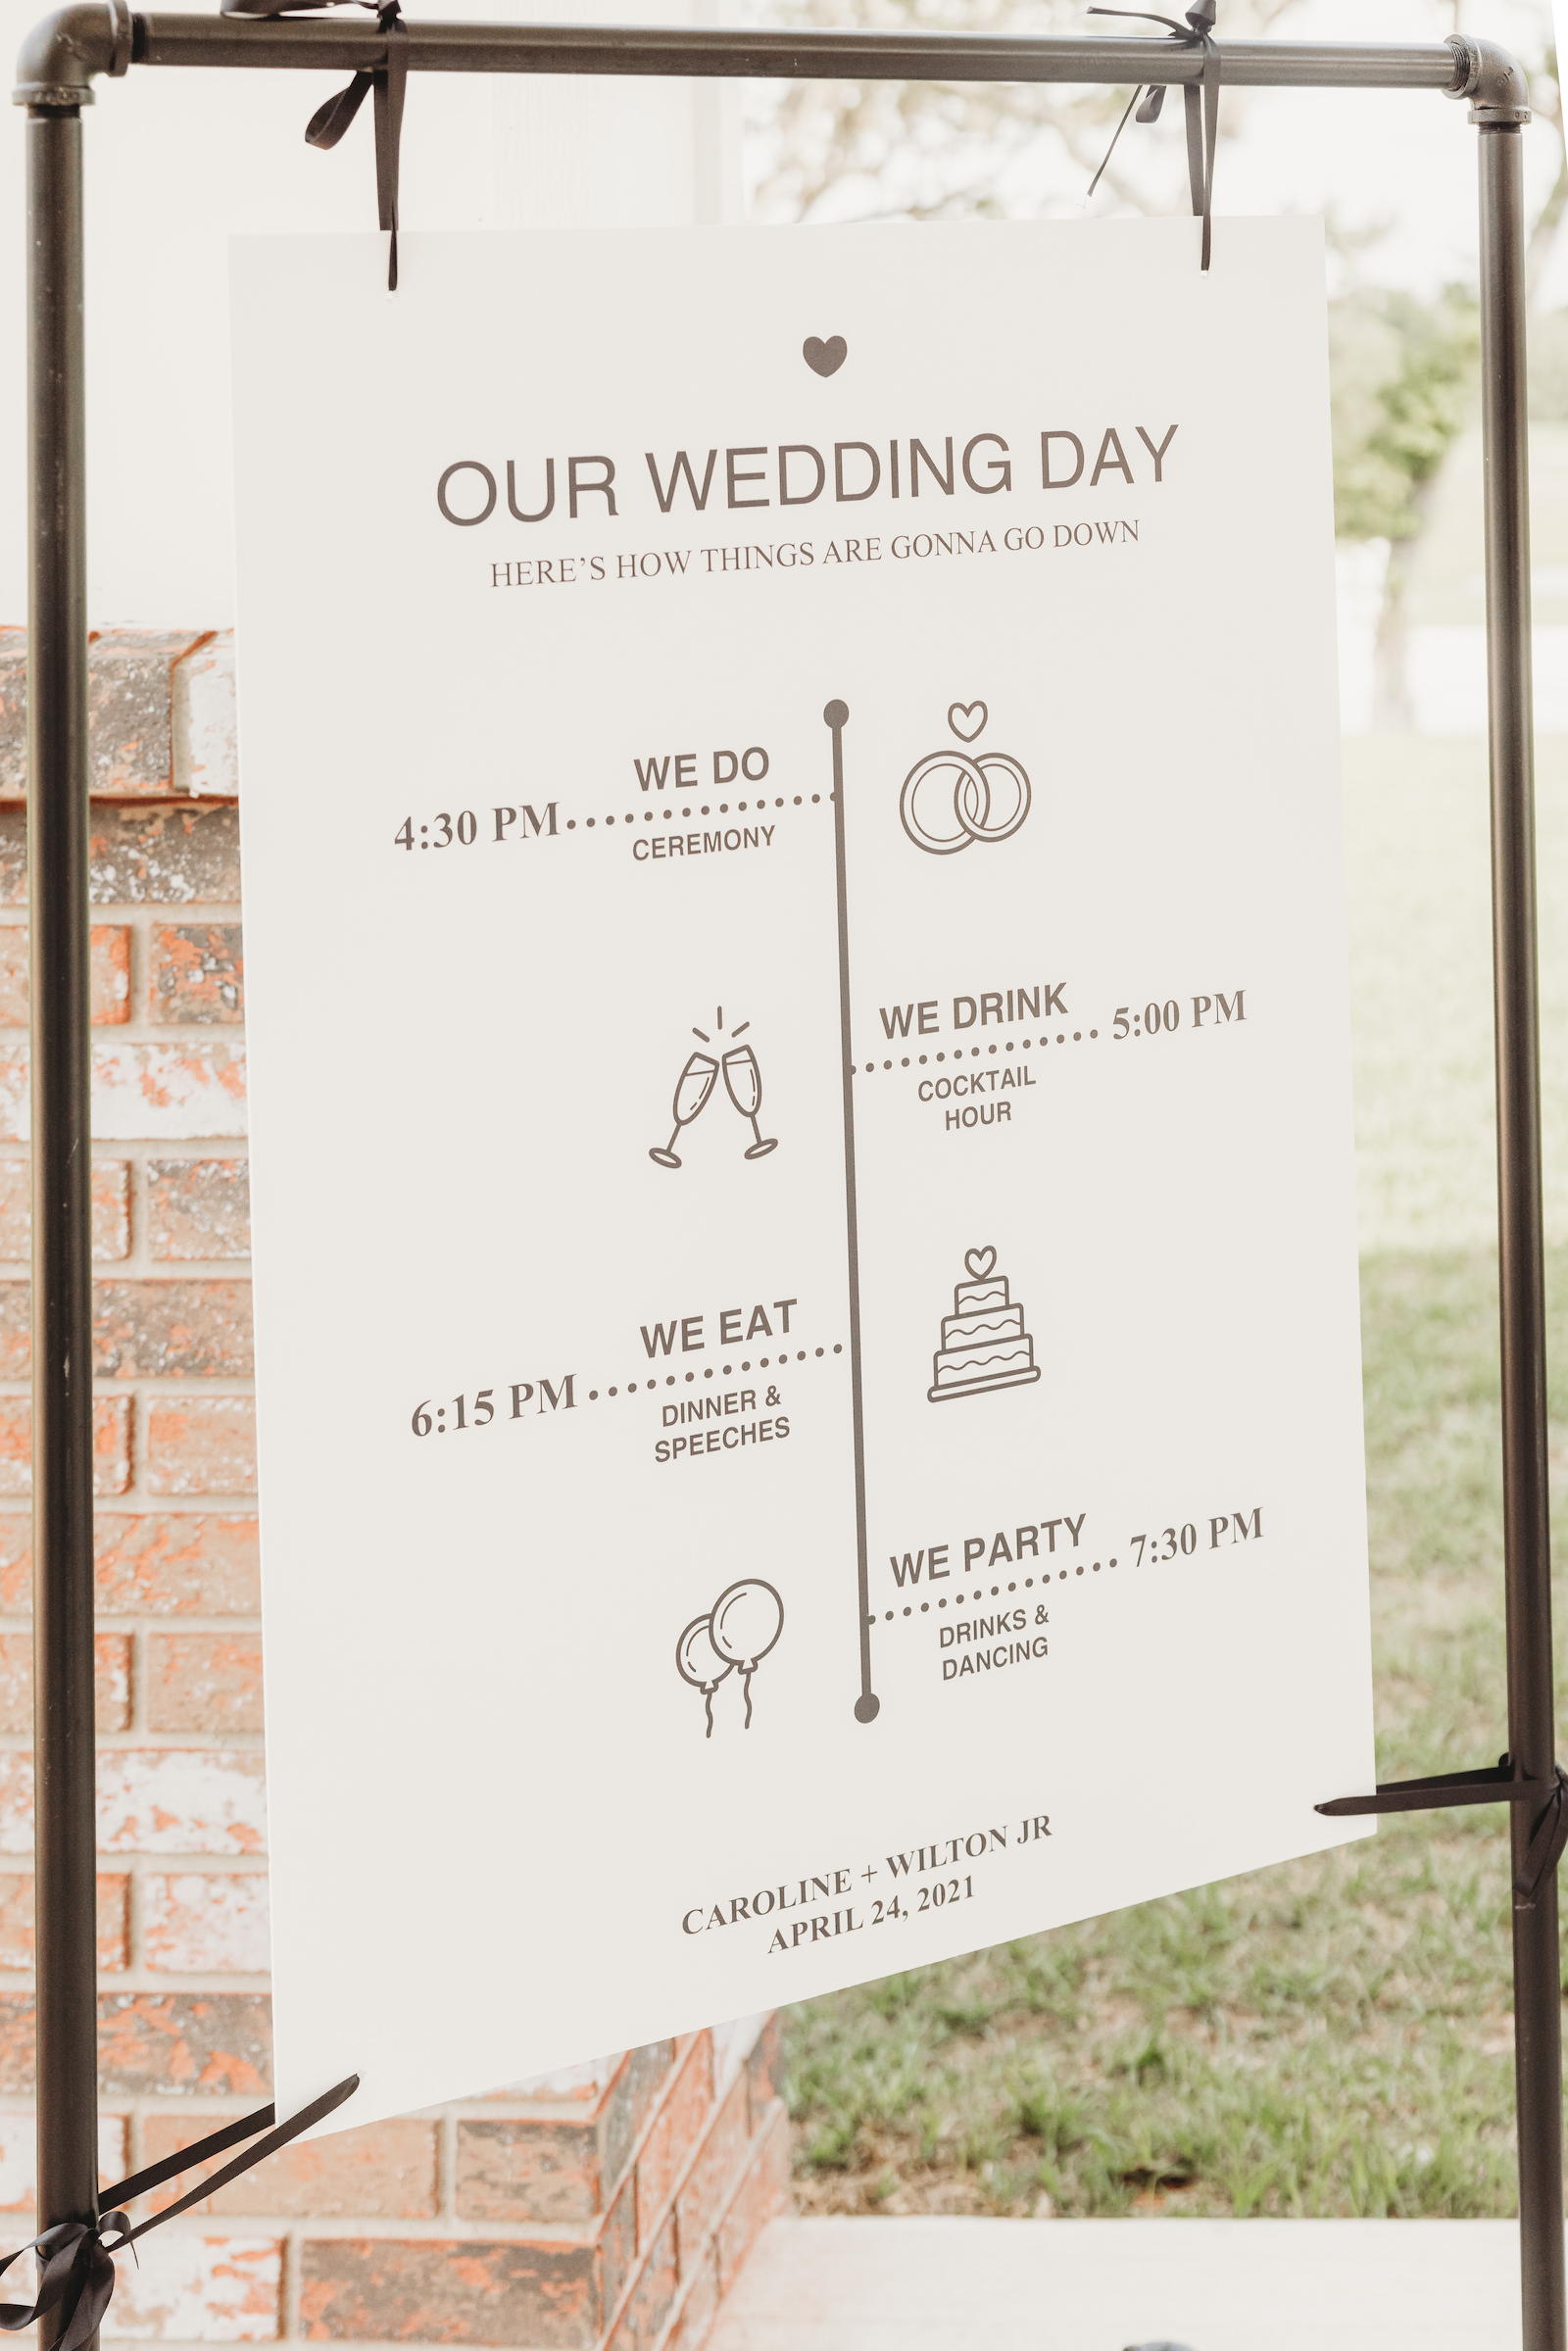 Classic Black and White Wedding Day Poster Size Program Signage